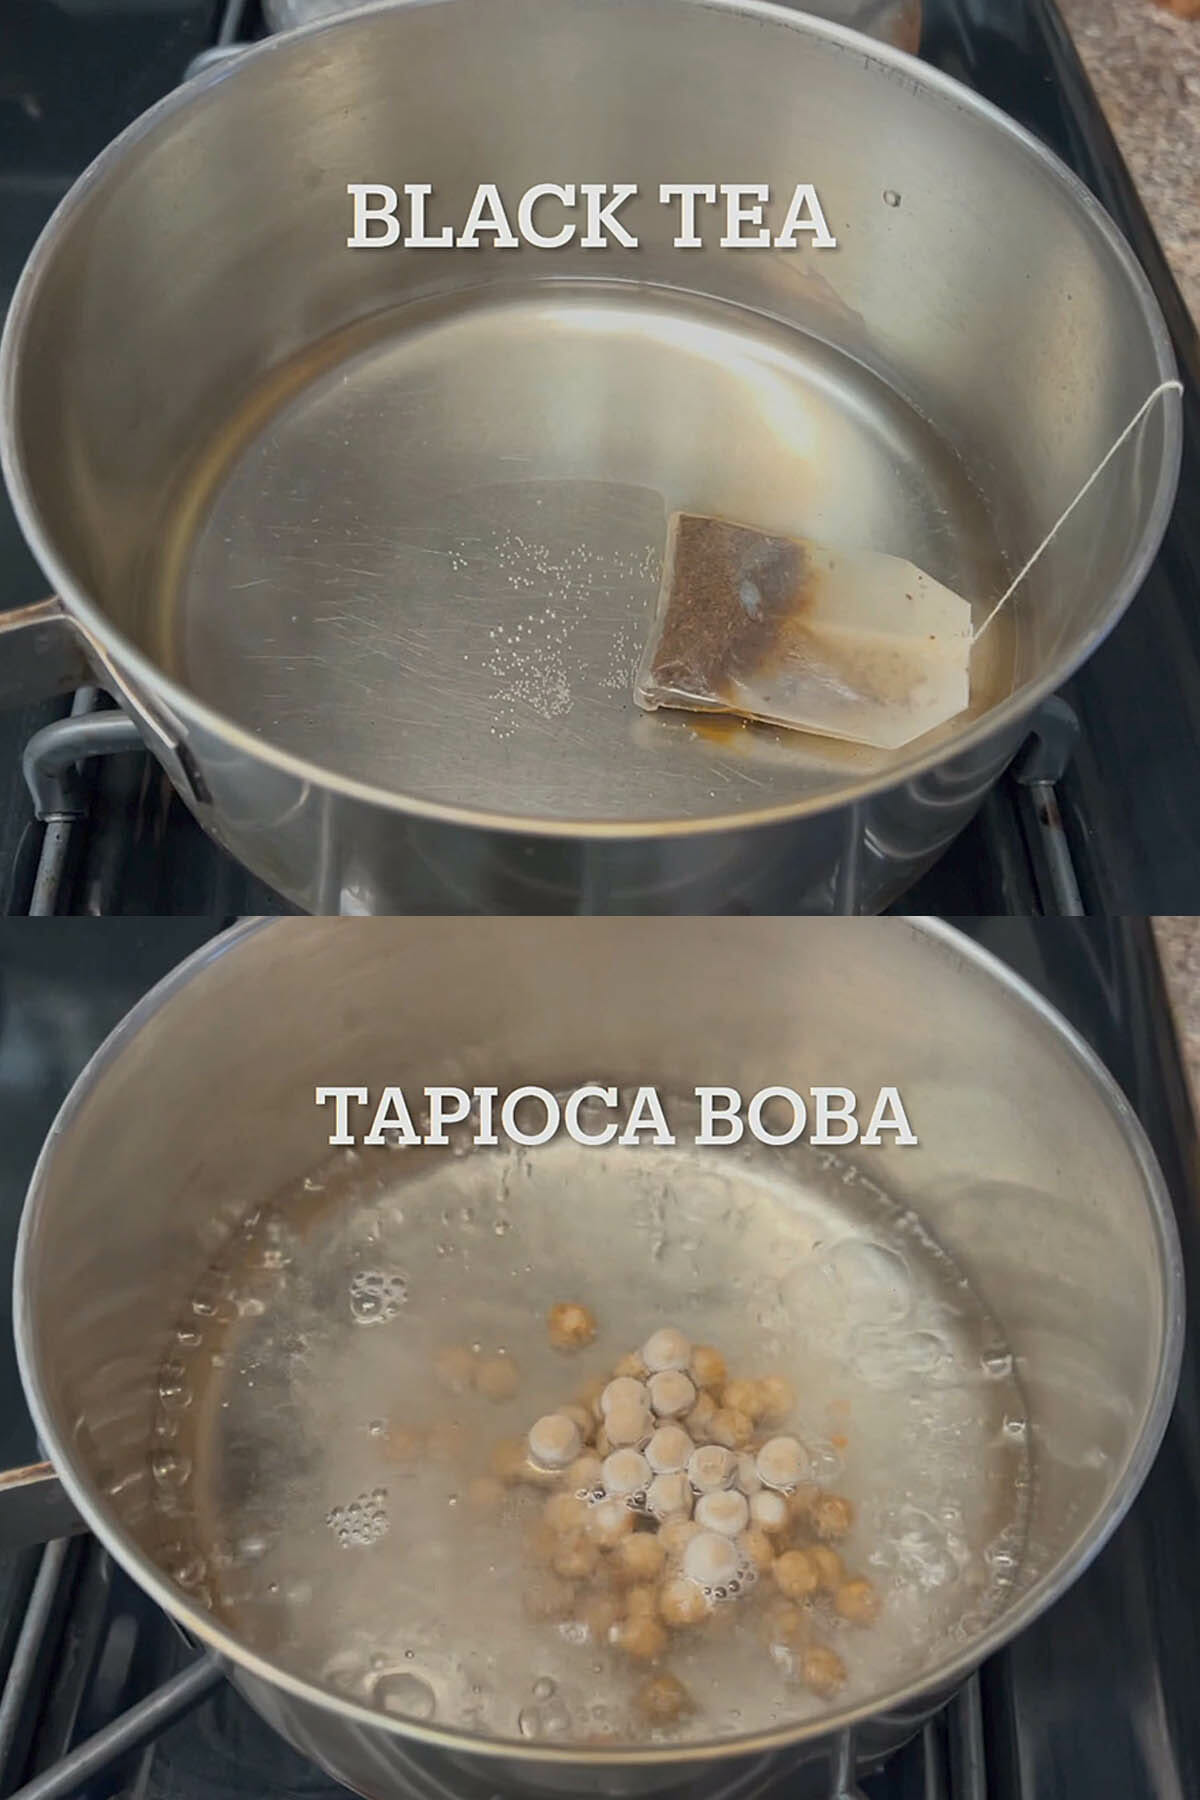 Black Tea in saucepan with water. Tapioca boba in a saucepan with water.